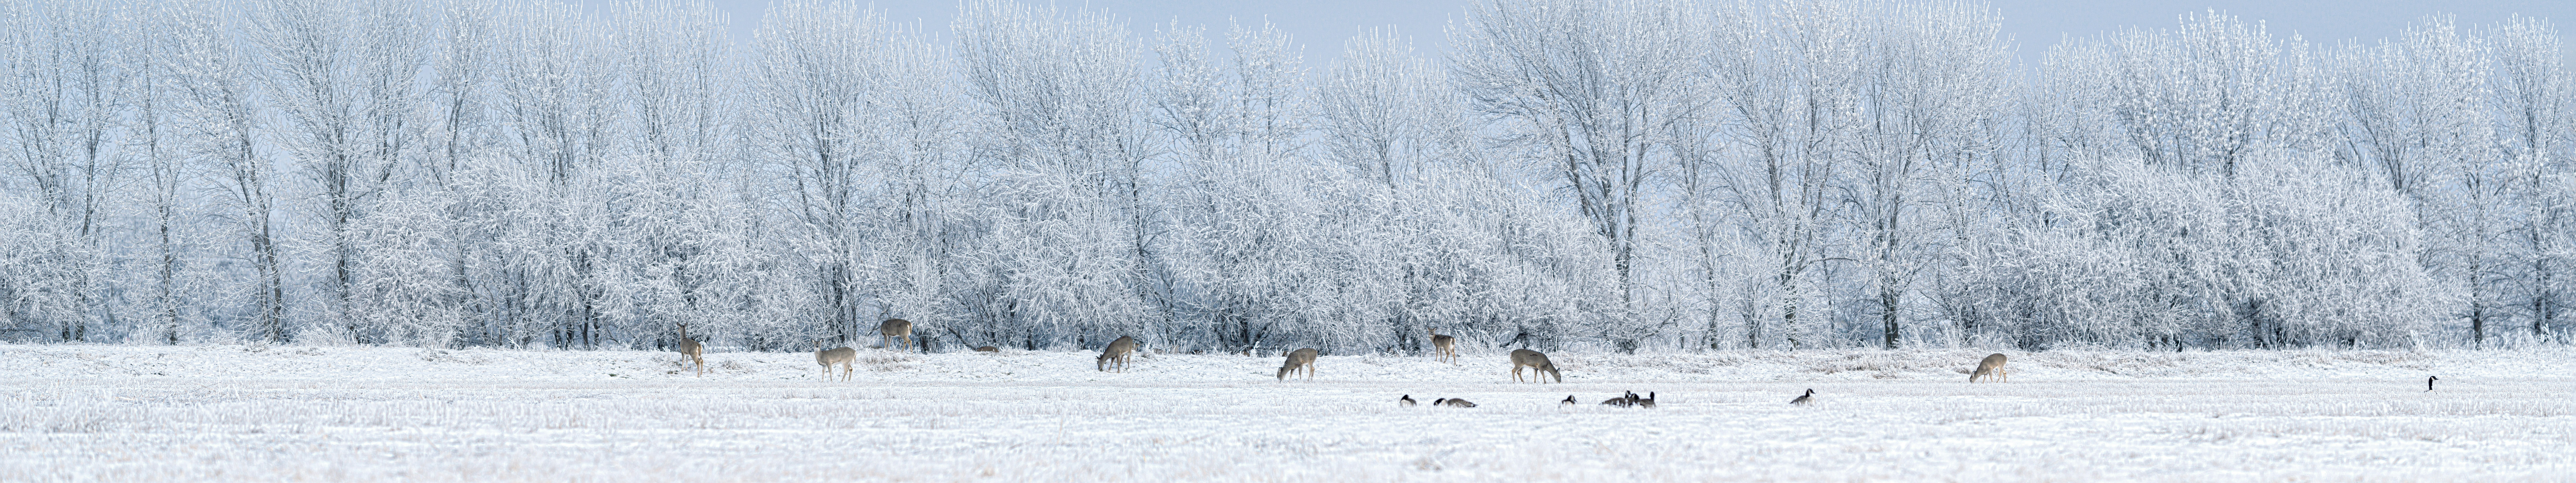 animals on snowy field during daytime